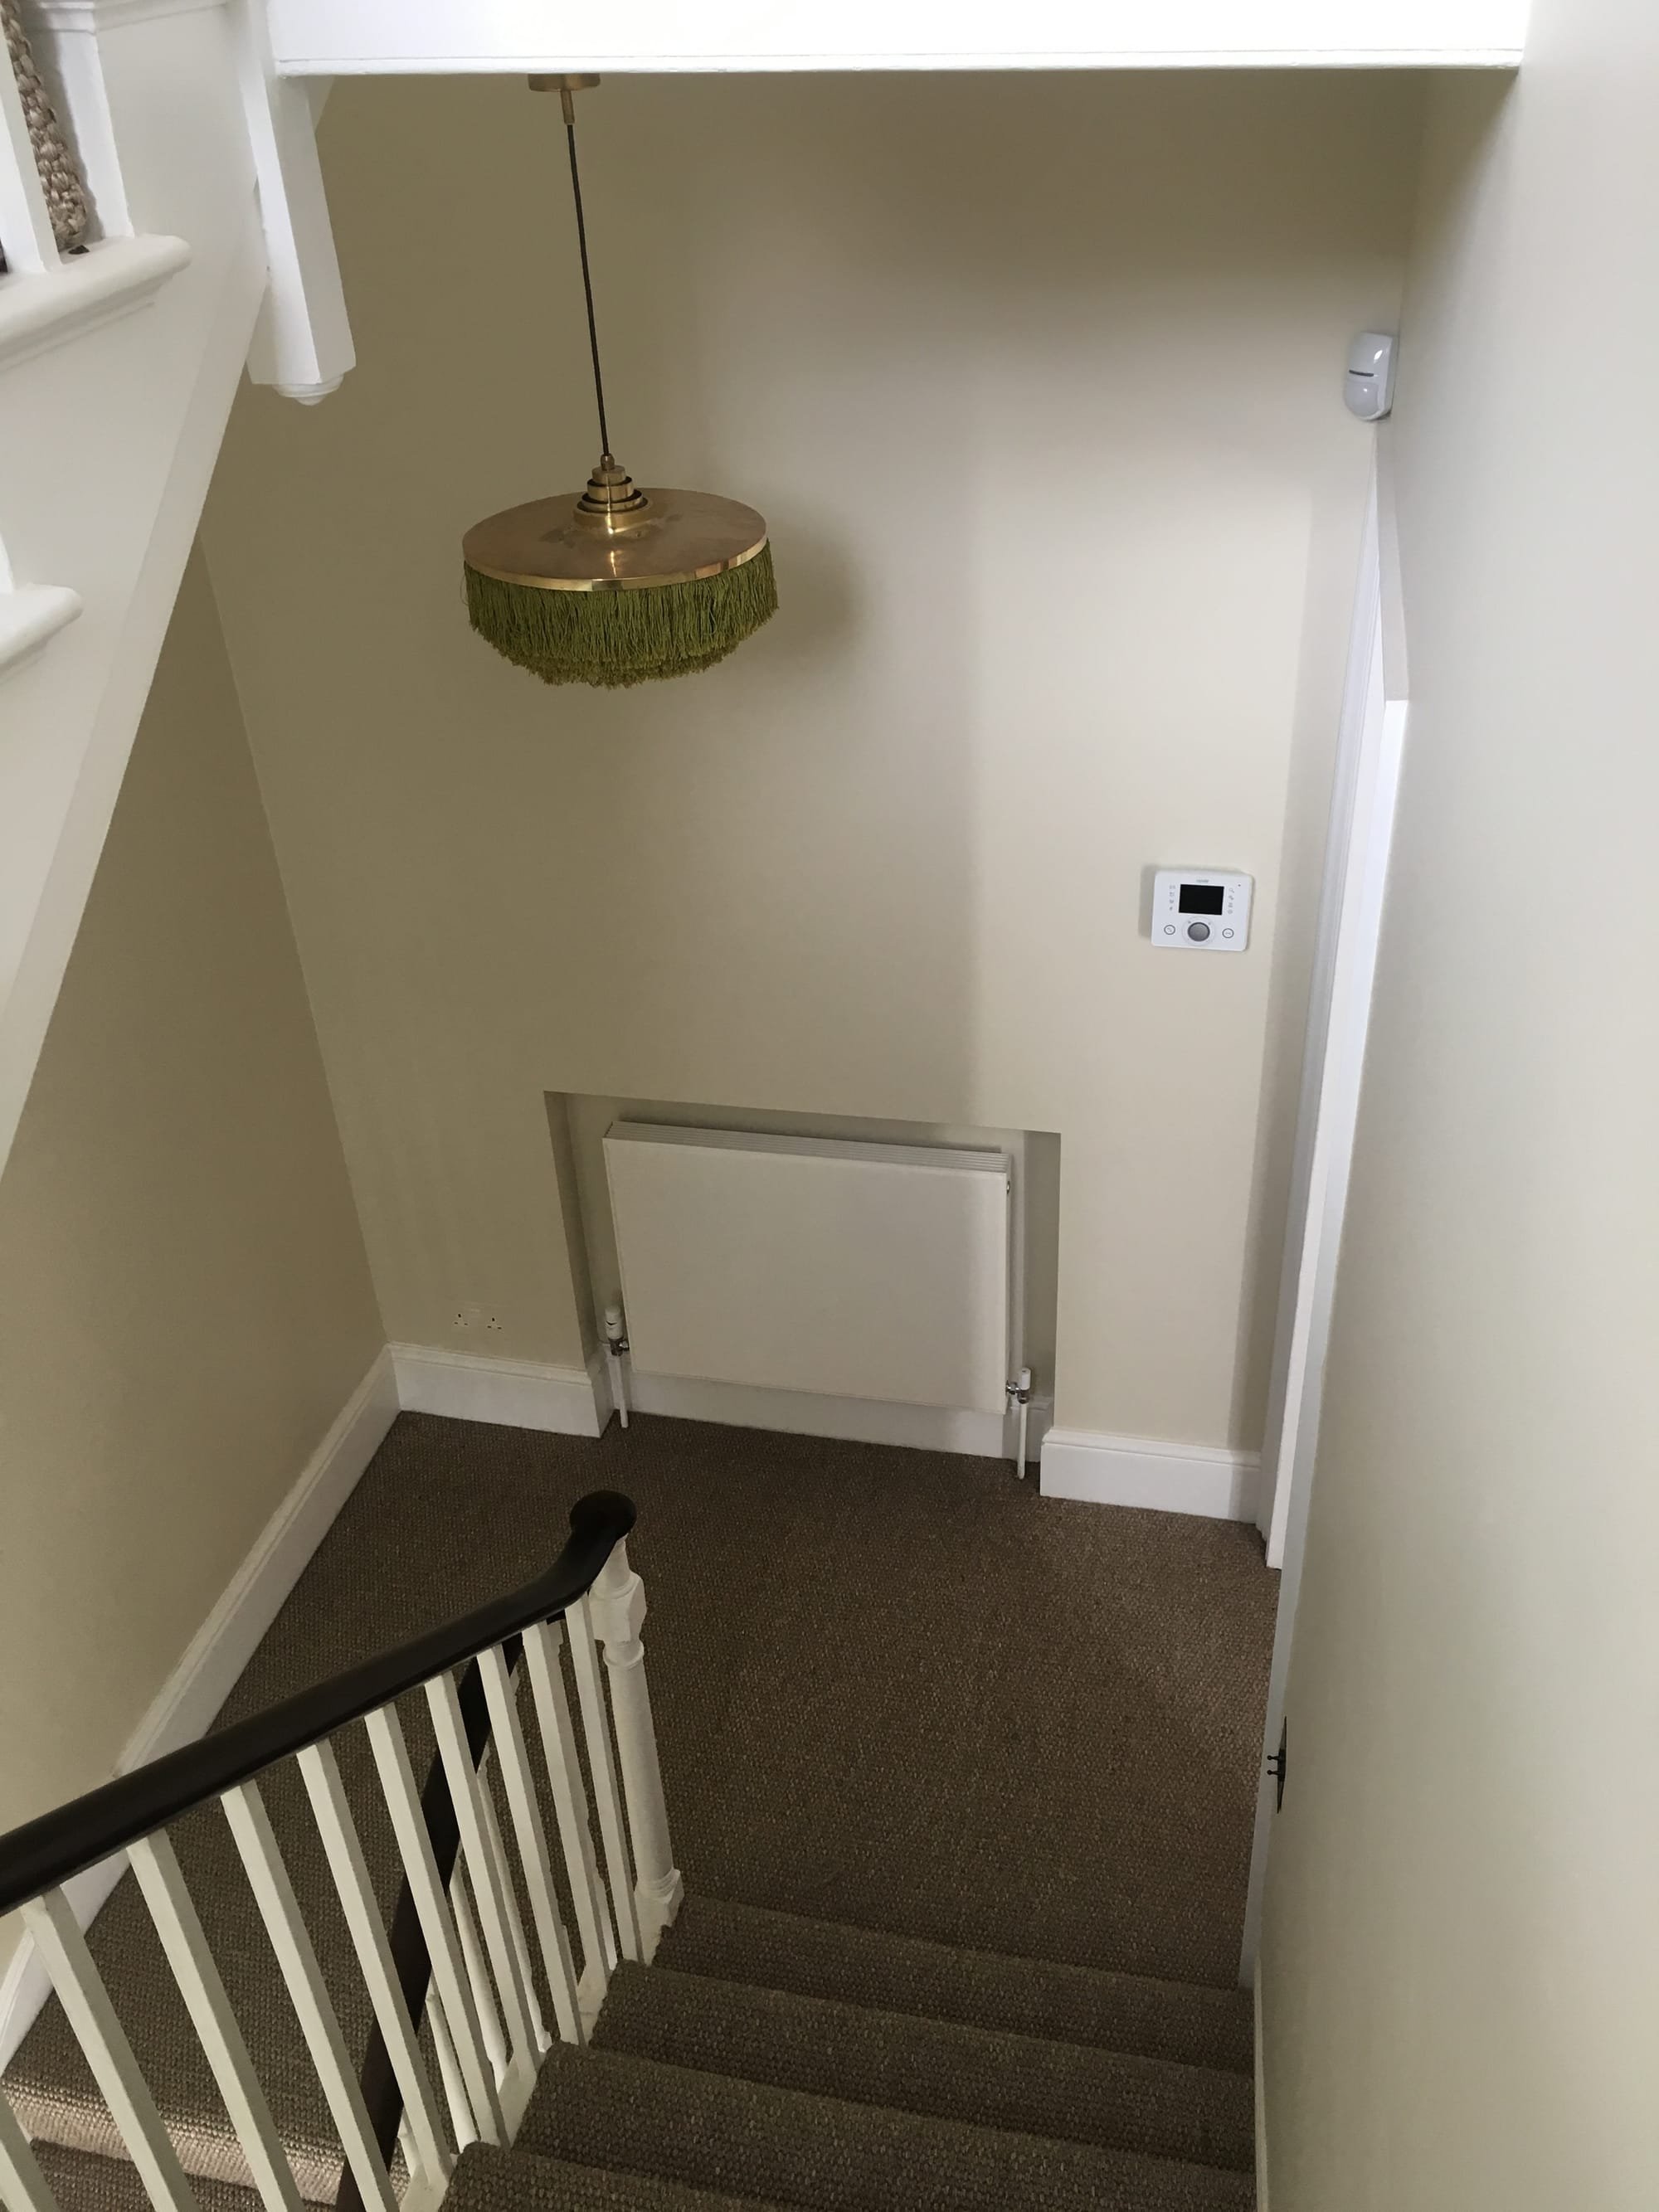 Recess built for hallway radiator as part of Clapham house refurbishment